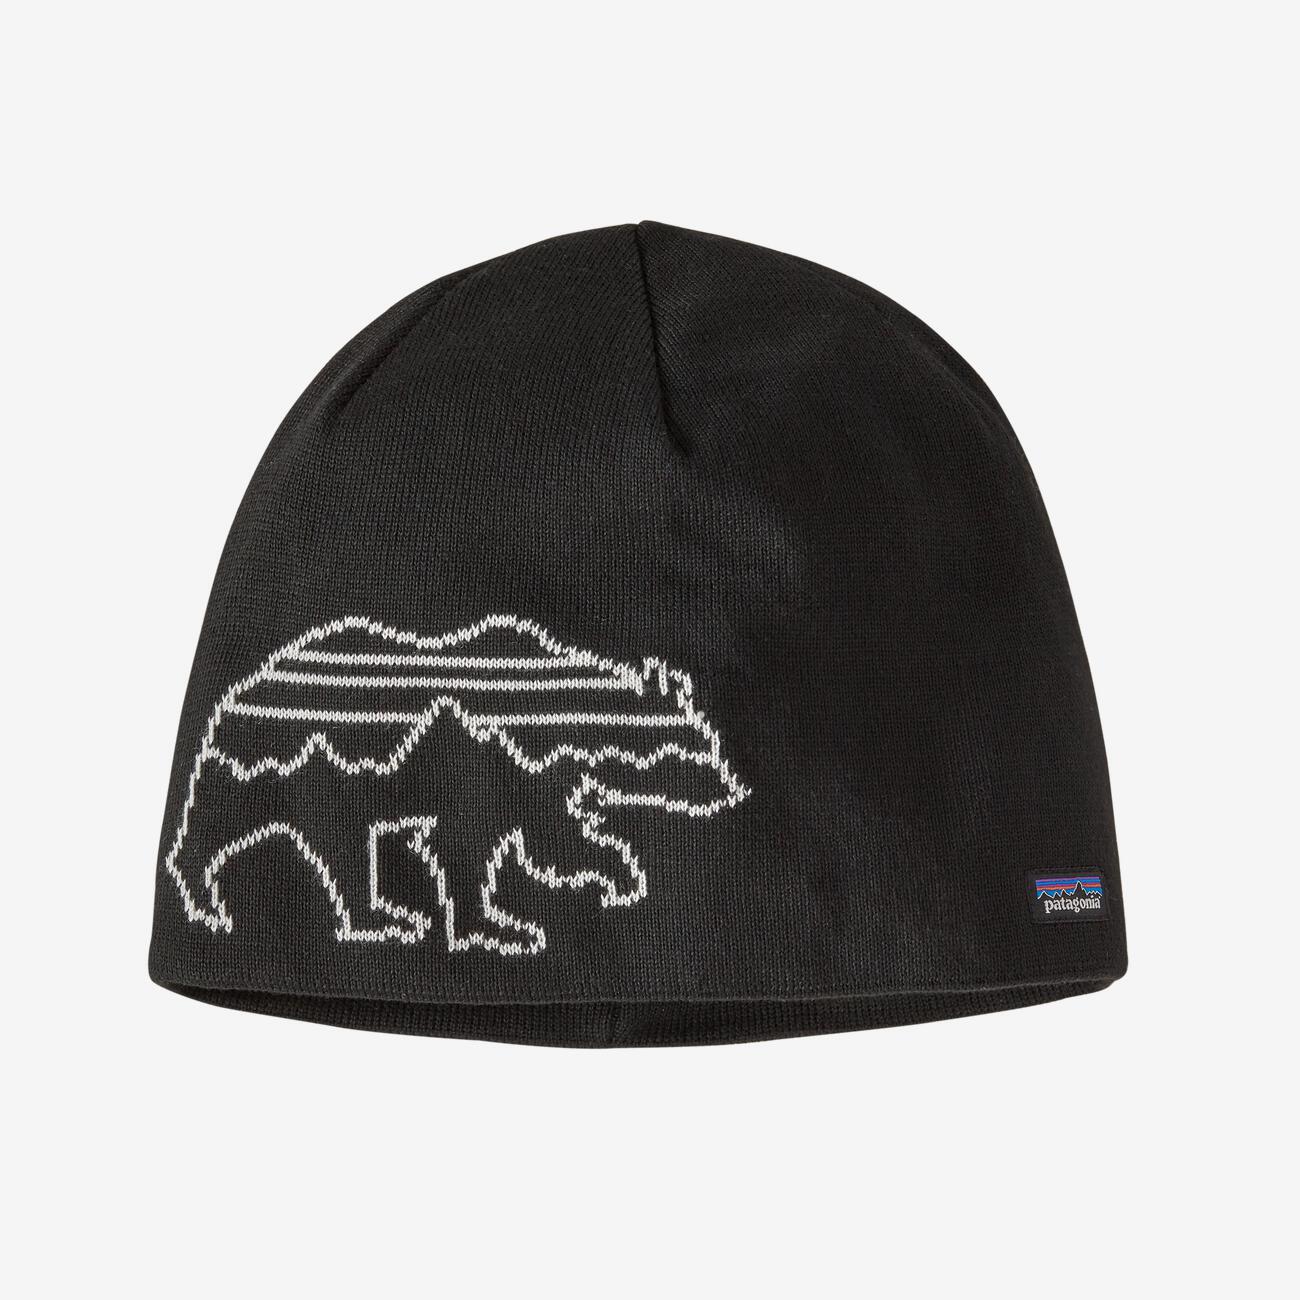 Patagonia Beanie Hat (Fitz Bear Knit/Black)